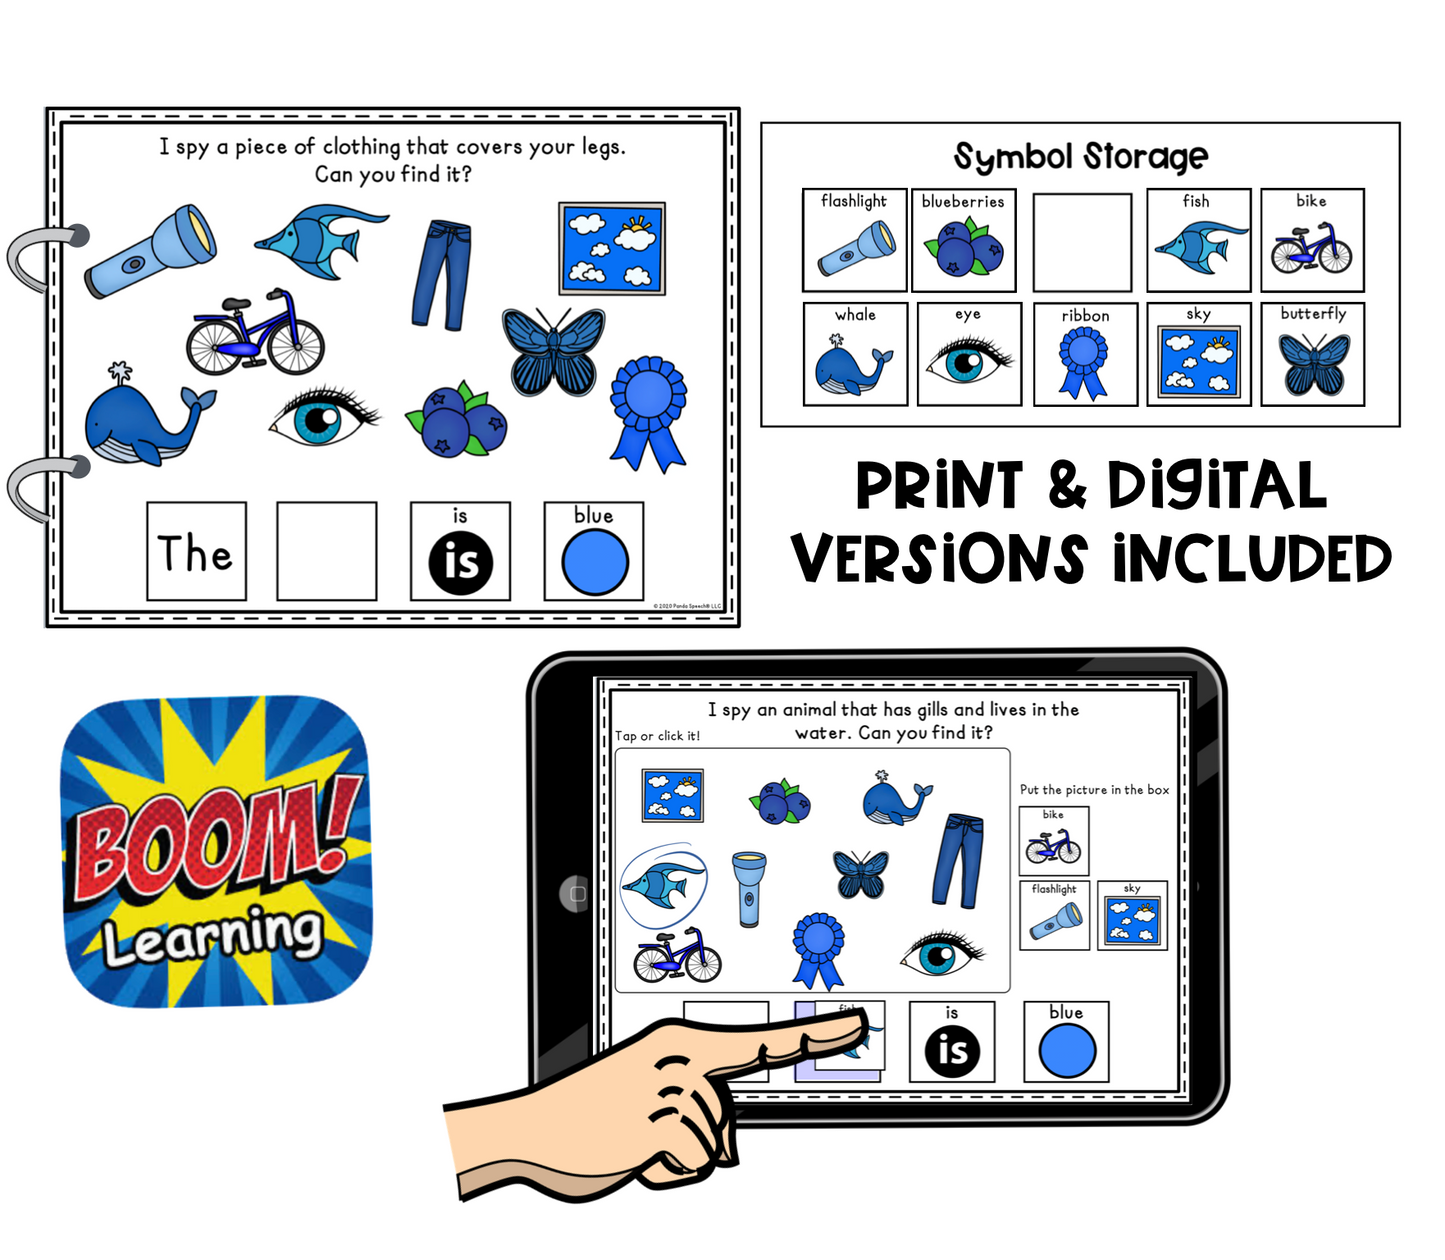 I Spy BLUE Things! Color Series Print & Make Books (includes a digital BOOM Card book)